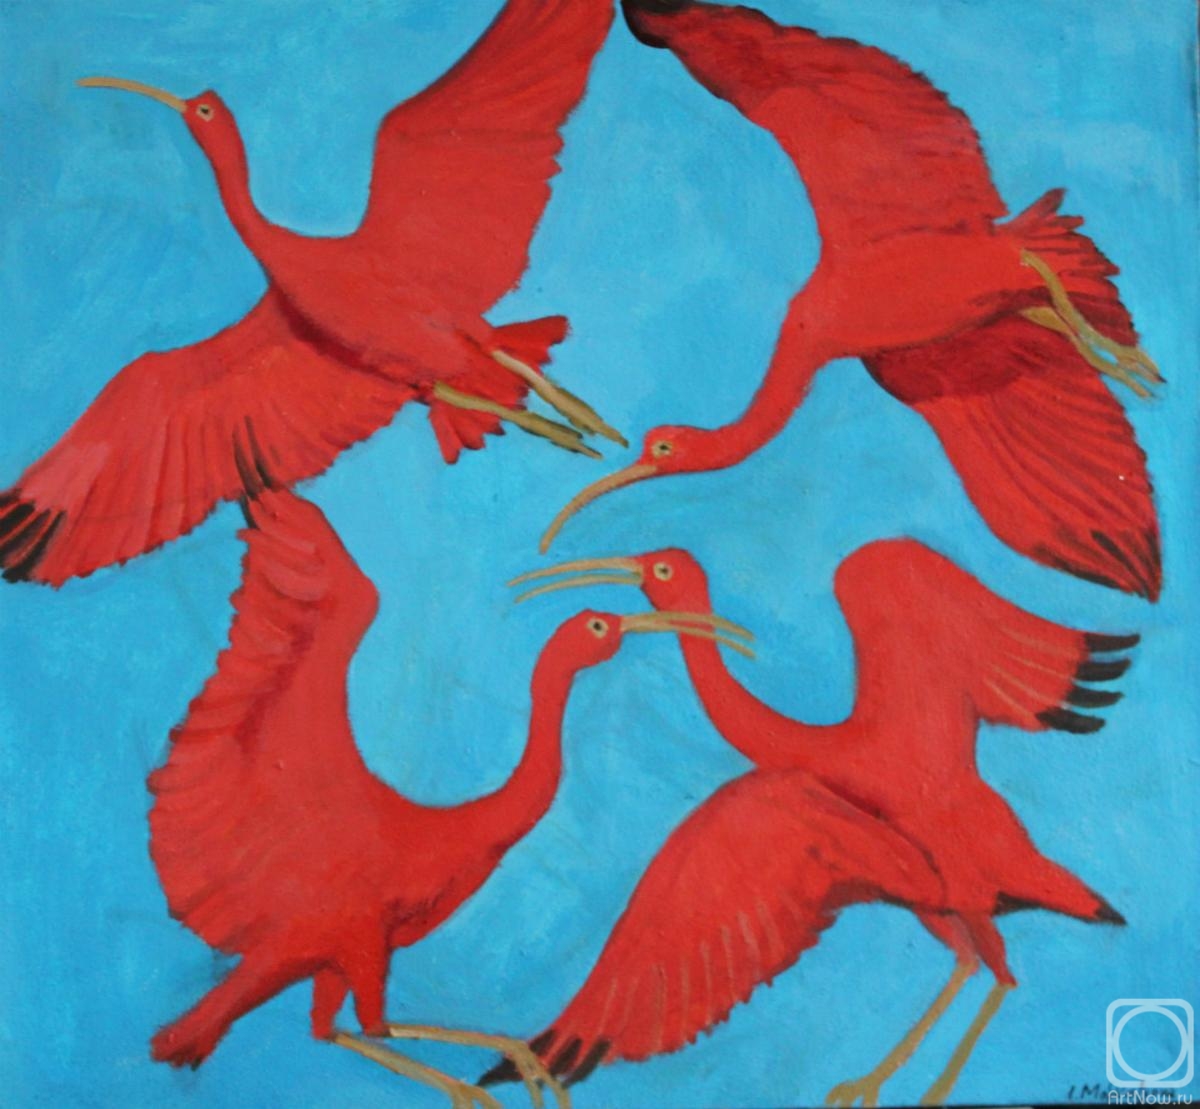 Moskaleva Irina. Dance of red ibises